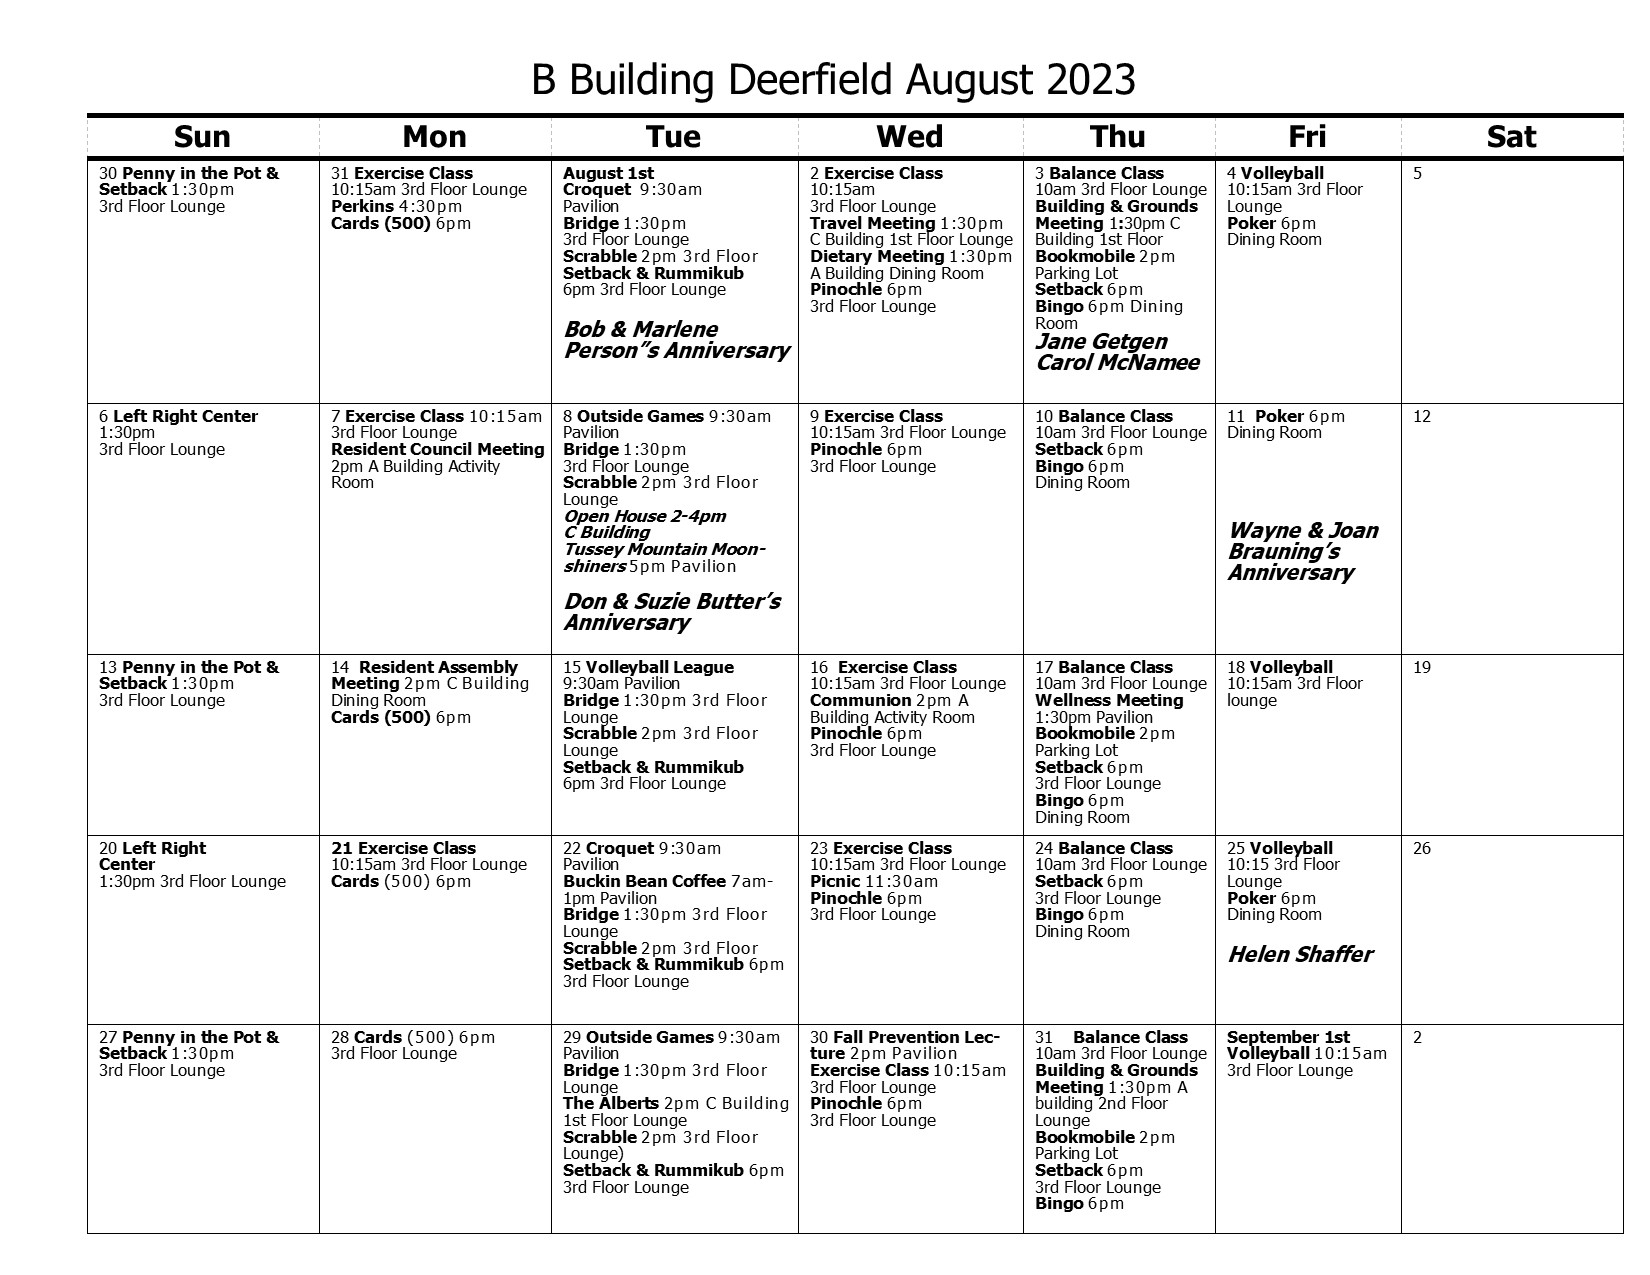 B Building Calendar August 2023